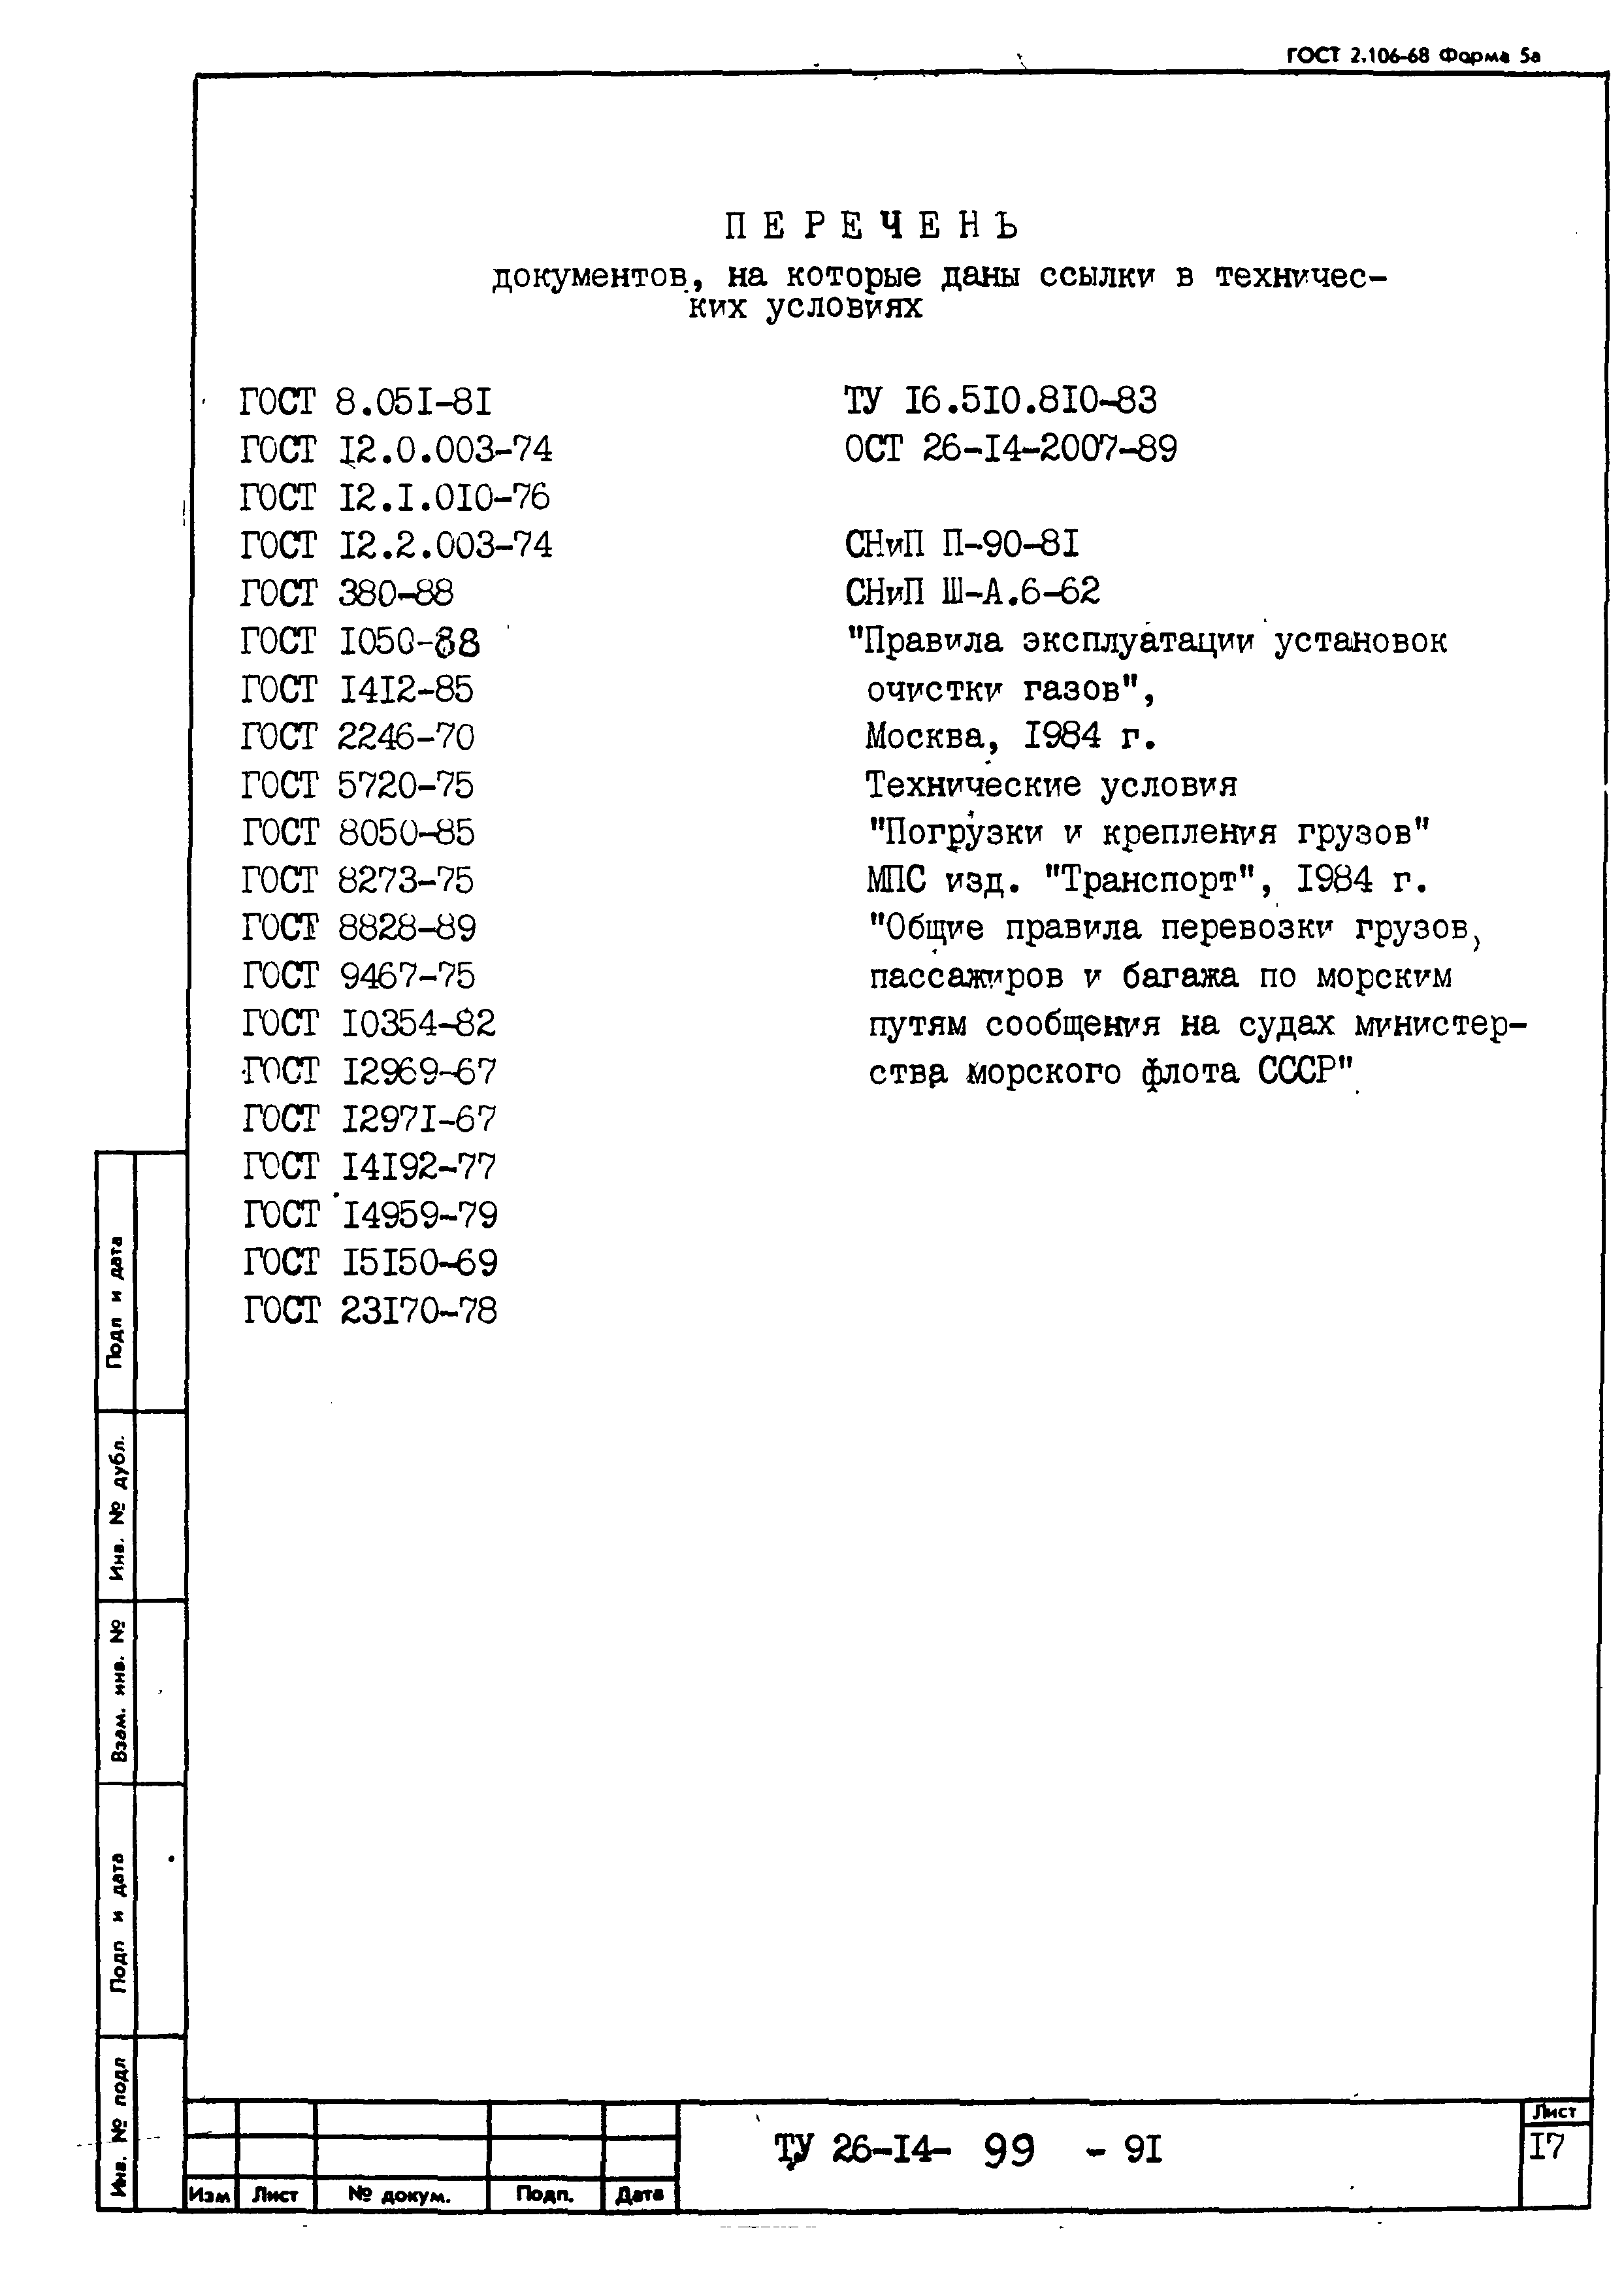 ТУ 26-14-99-91